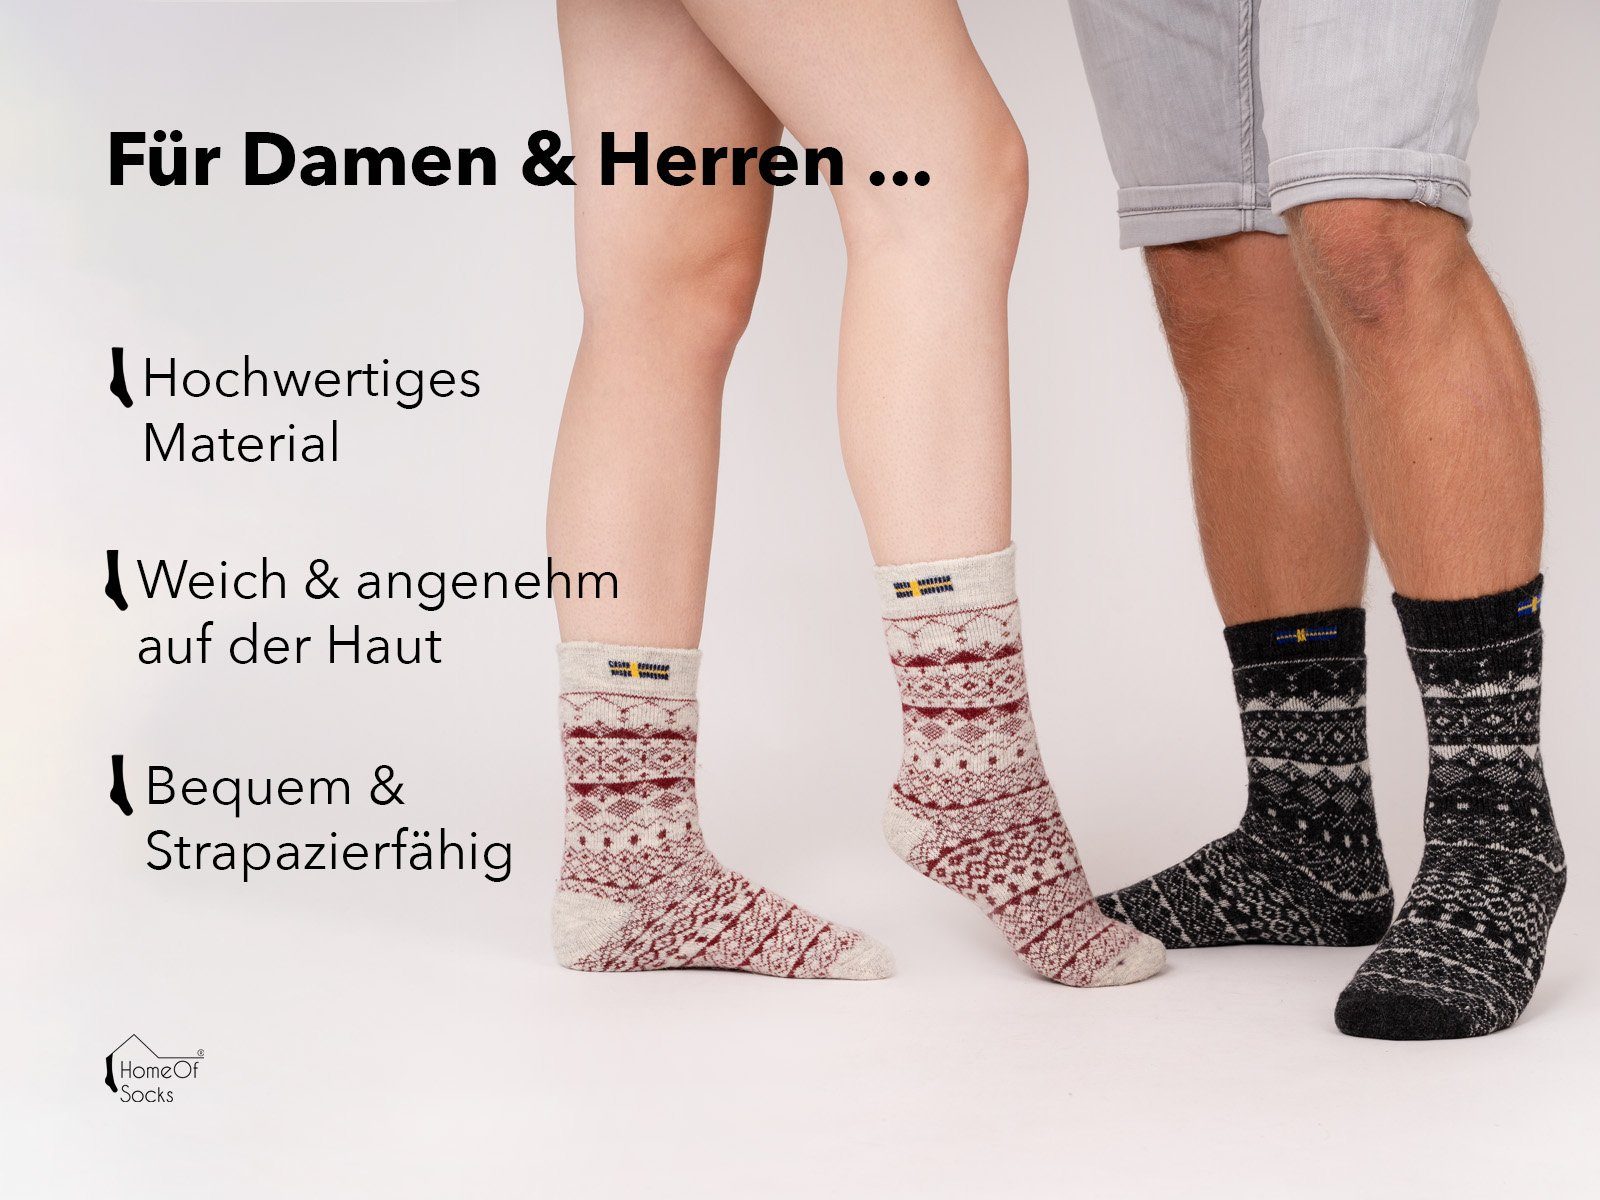 Anthrazit Wollanteil 80% Wollsocke HomeOfSocks Socken Design Kuschelsocken Norwegischem Nordic Dicke Hyggelig Hoher Schweden" "Jacquard Norwegersocken Warm Skandinavische